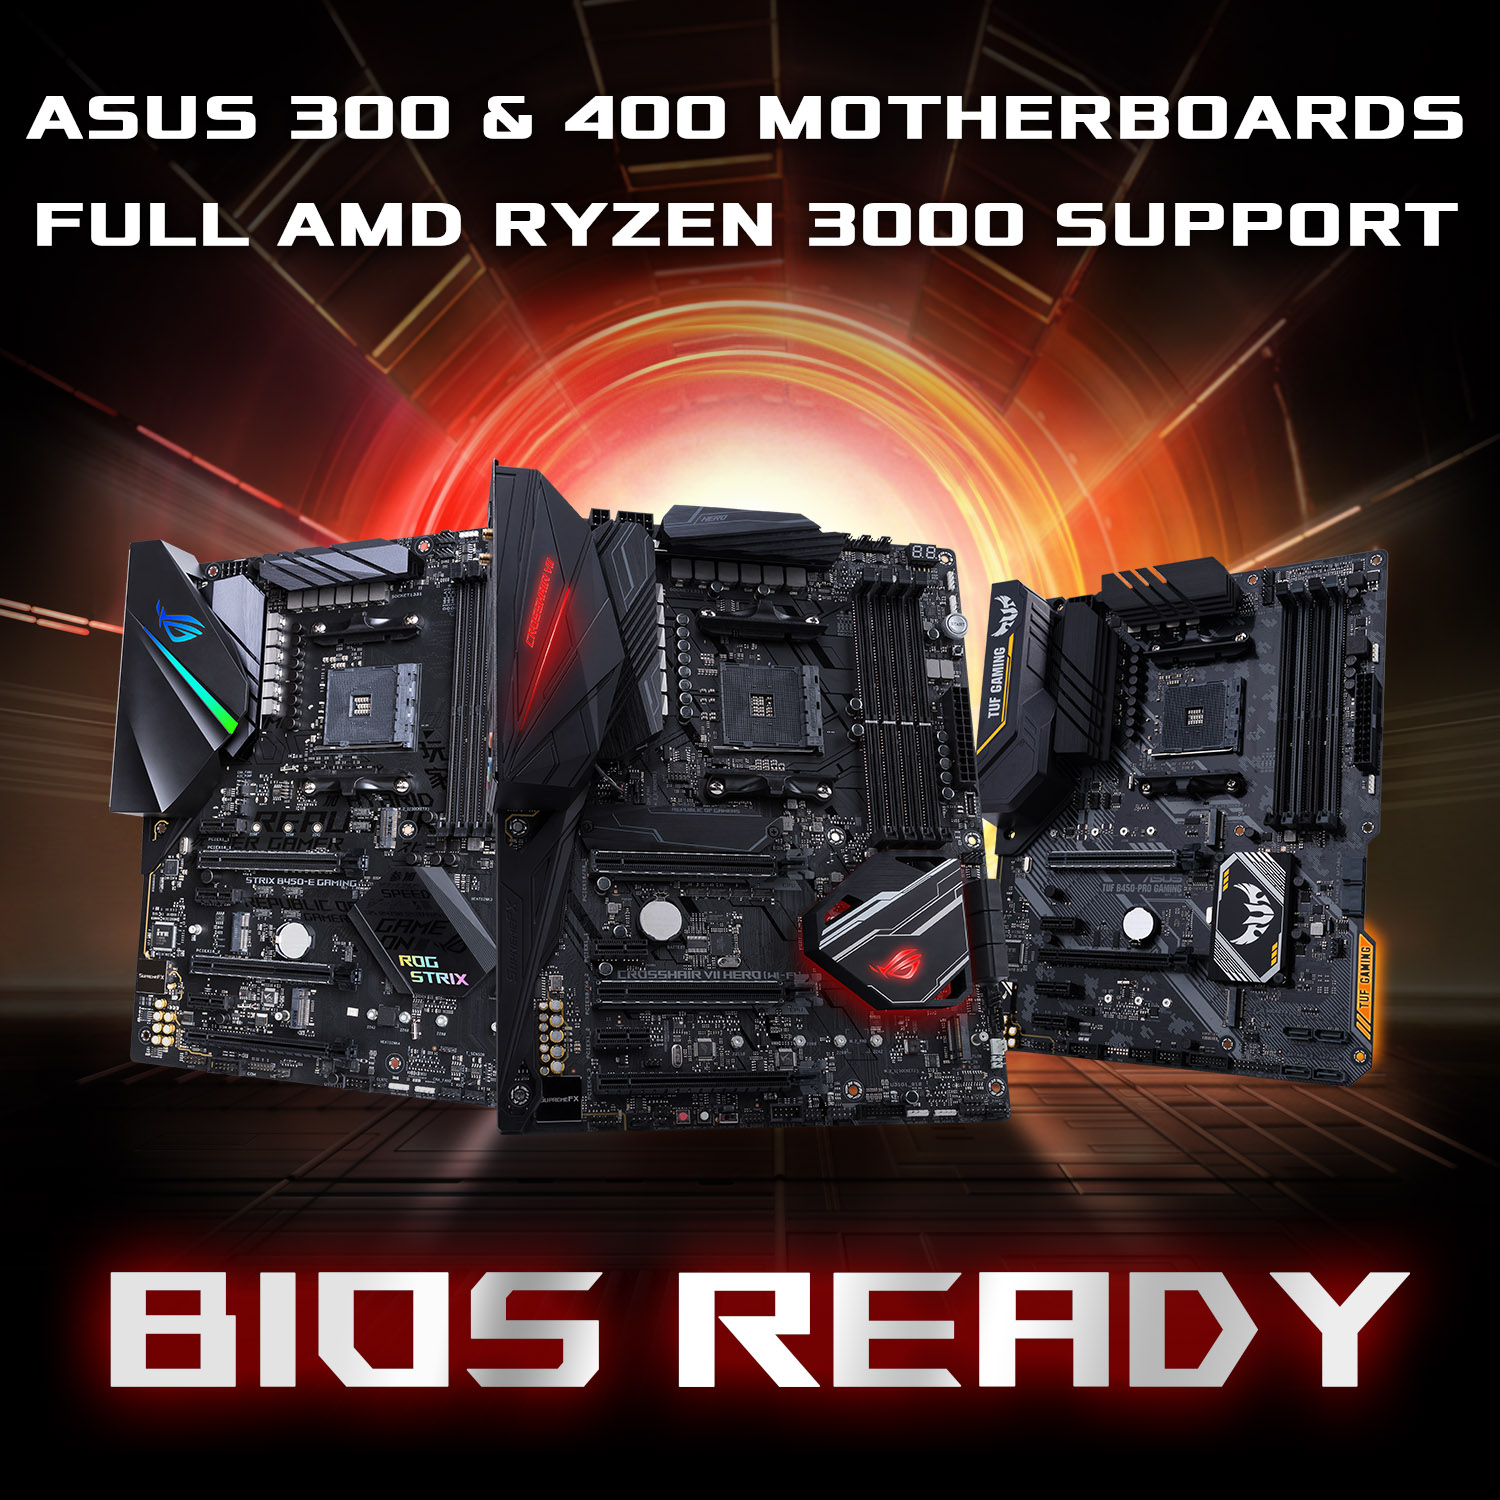 asus 300 400 series bios ready for ryzen 30001 เมนบอร์ด ASUS AM4 ซีรีย์ 300 และ 400 พร้อมรองรับซีพียู AMD Ryzen 3000 เป็นที่เรียบร้อยแล้ว